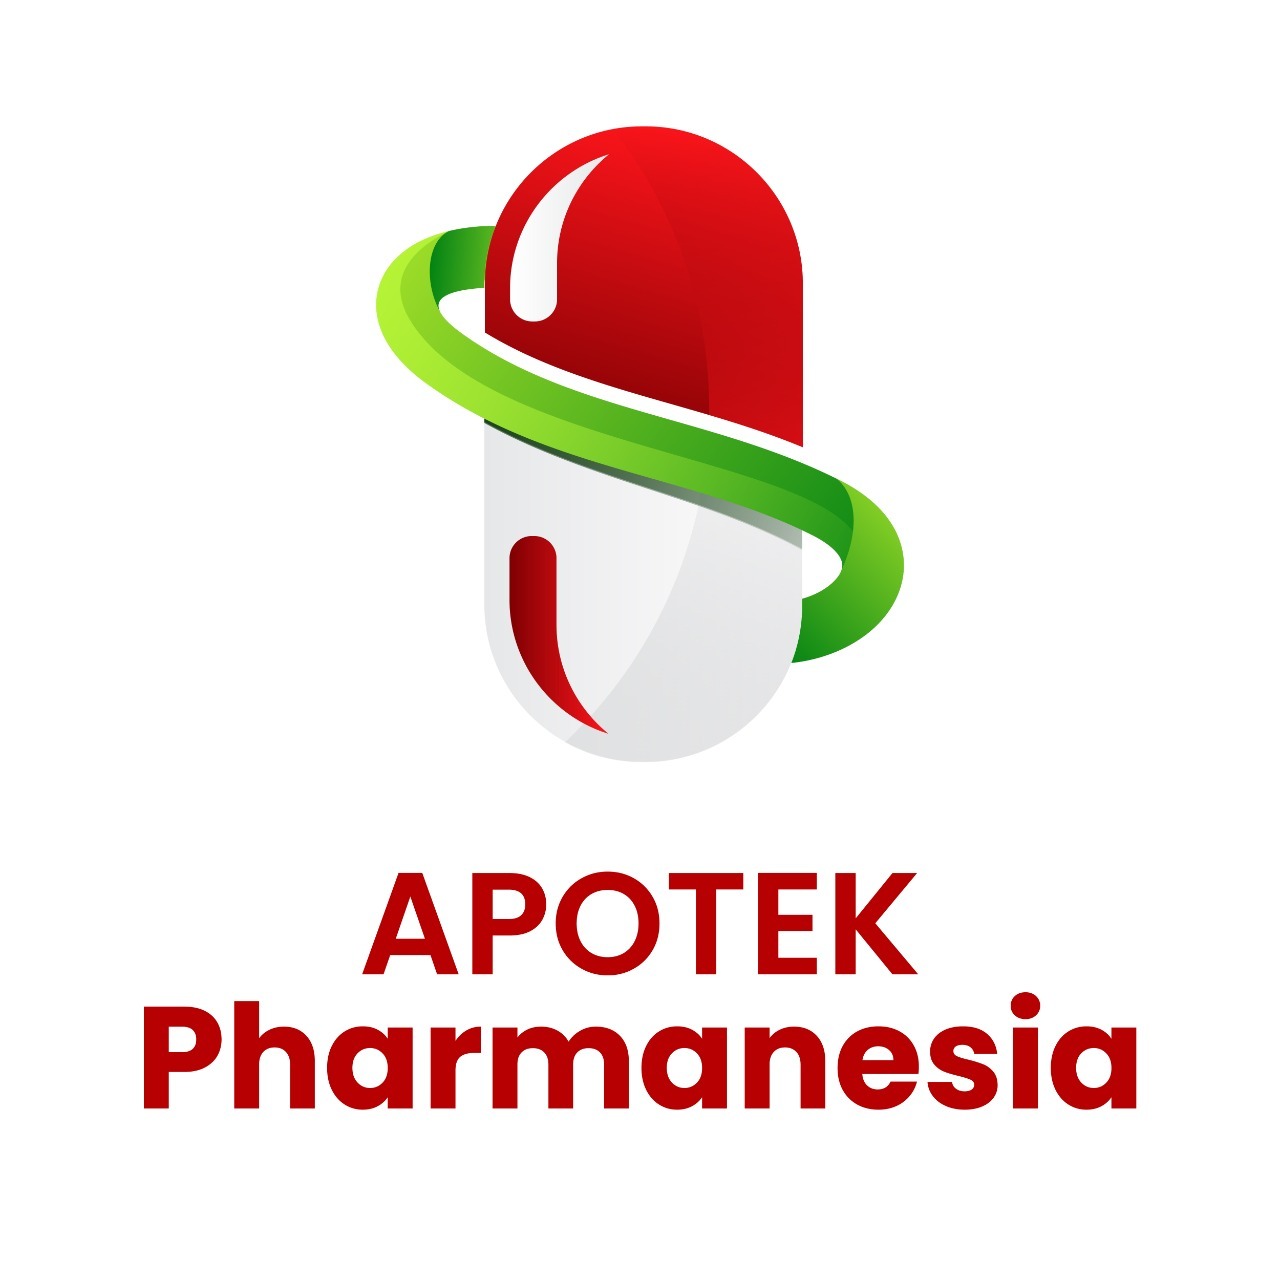 Apotek Pharmanesia